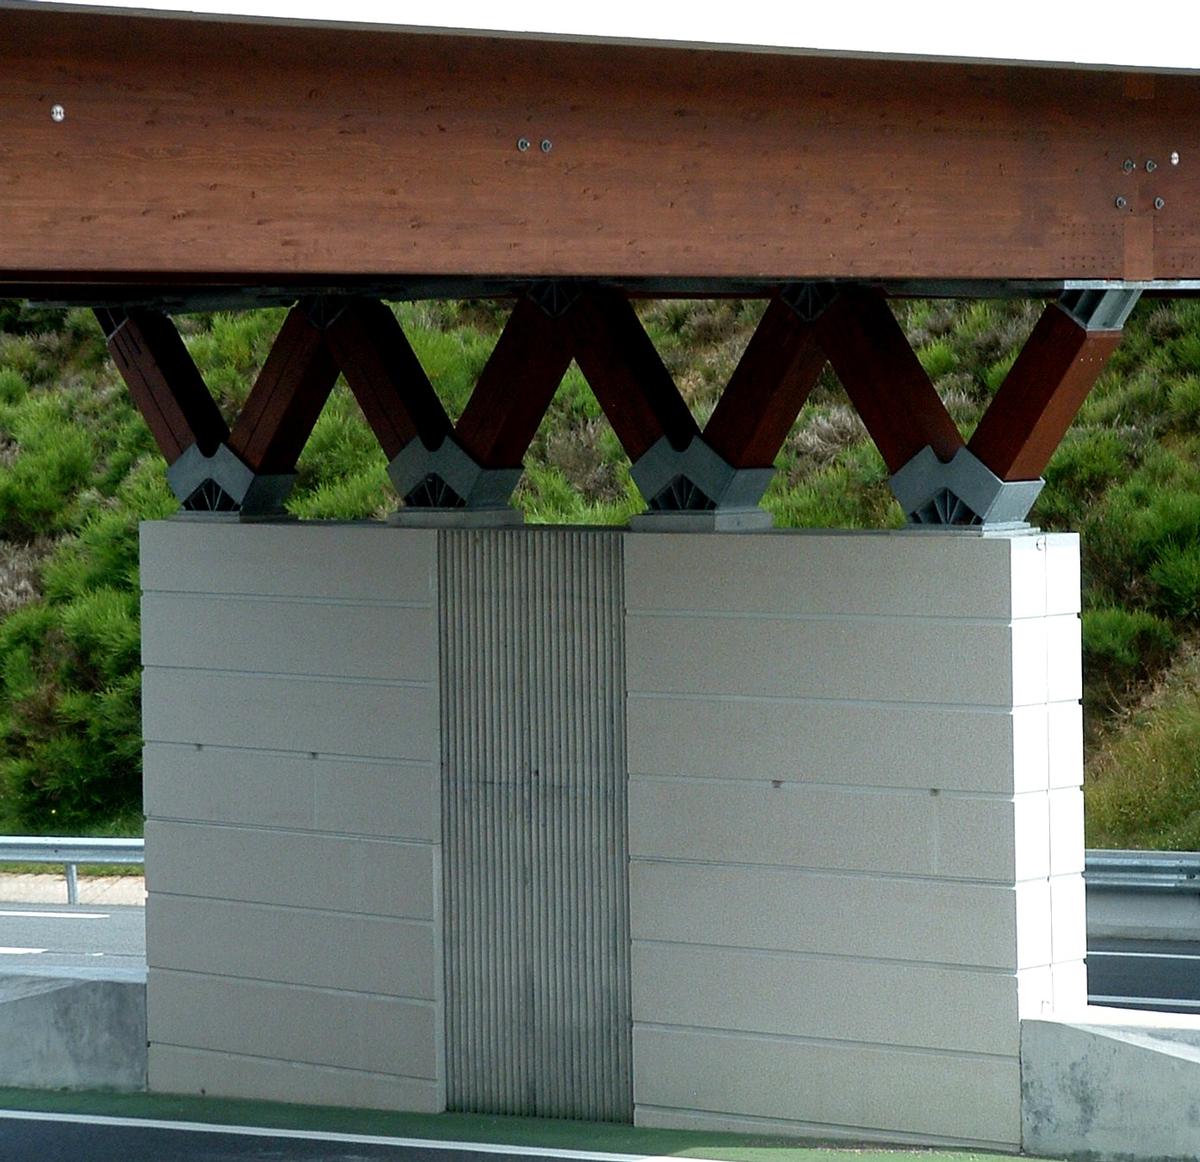 Access bridge to the Chavanon service station 